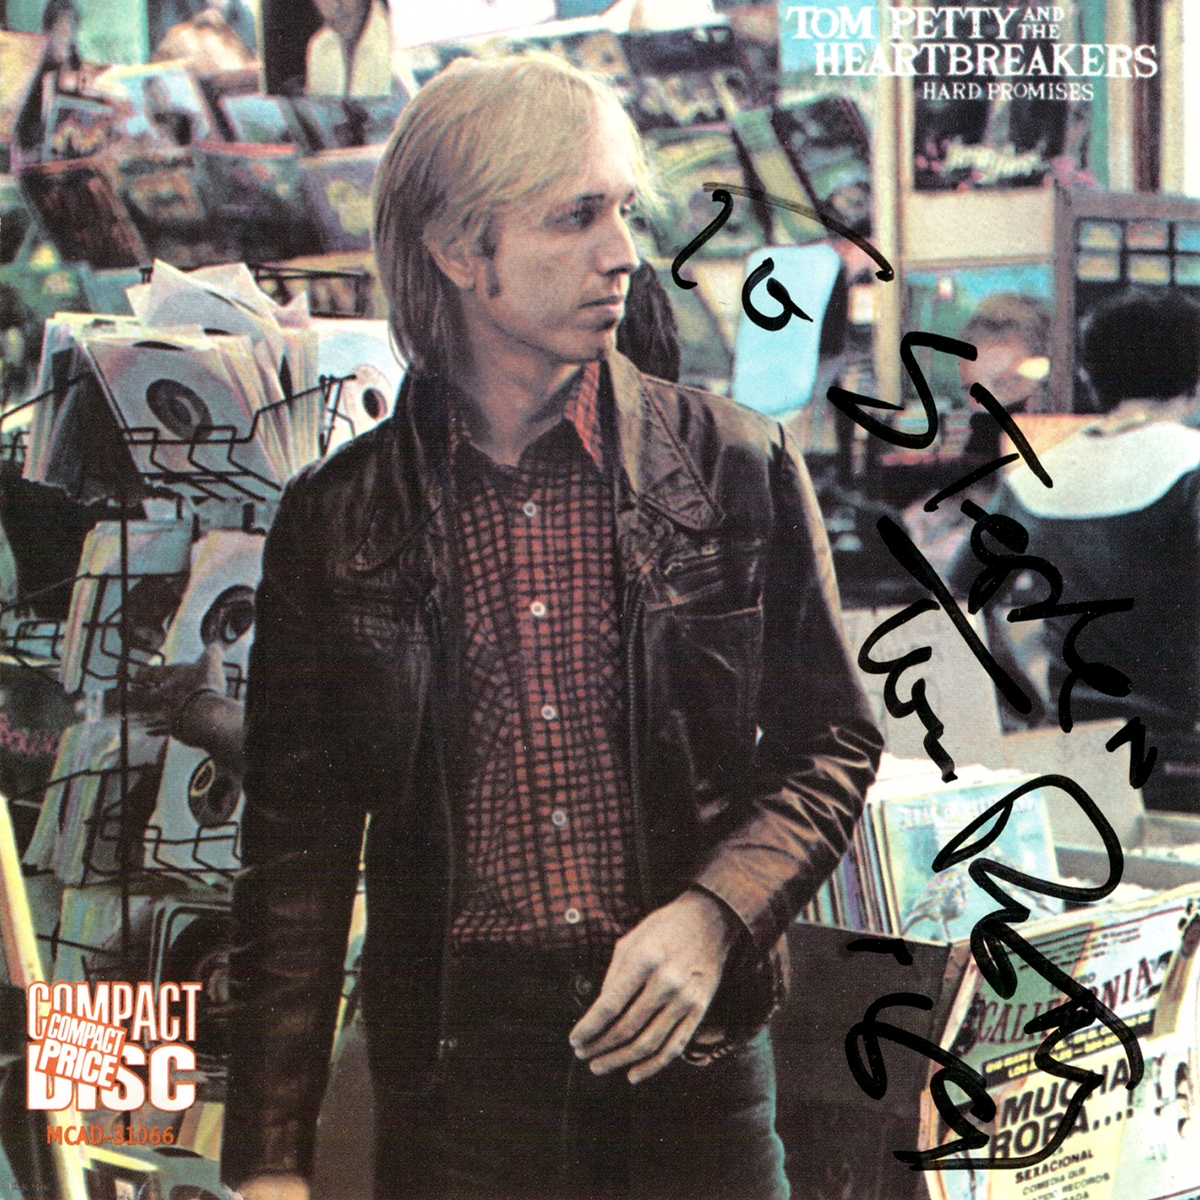 Tom Petty CD Cover - Hard Promises